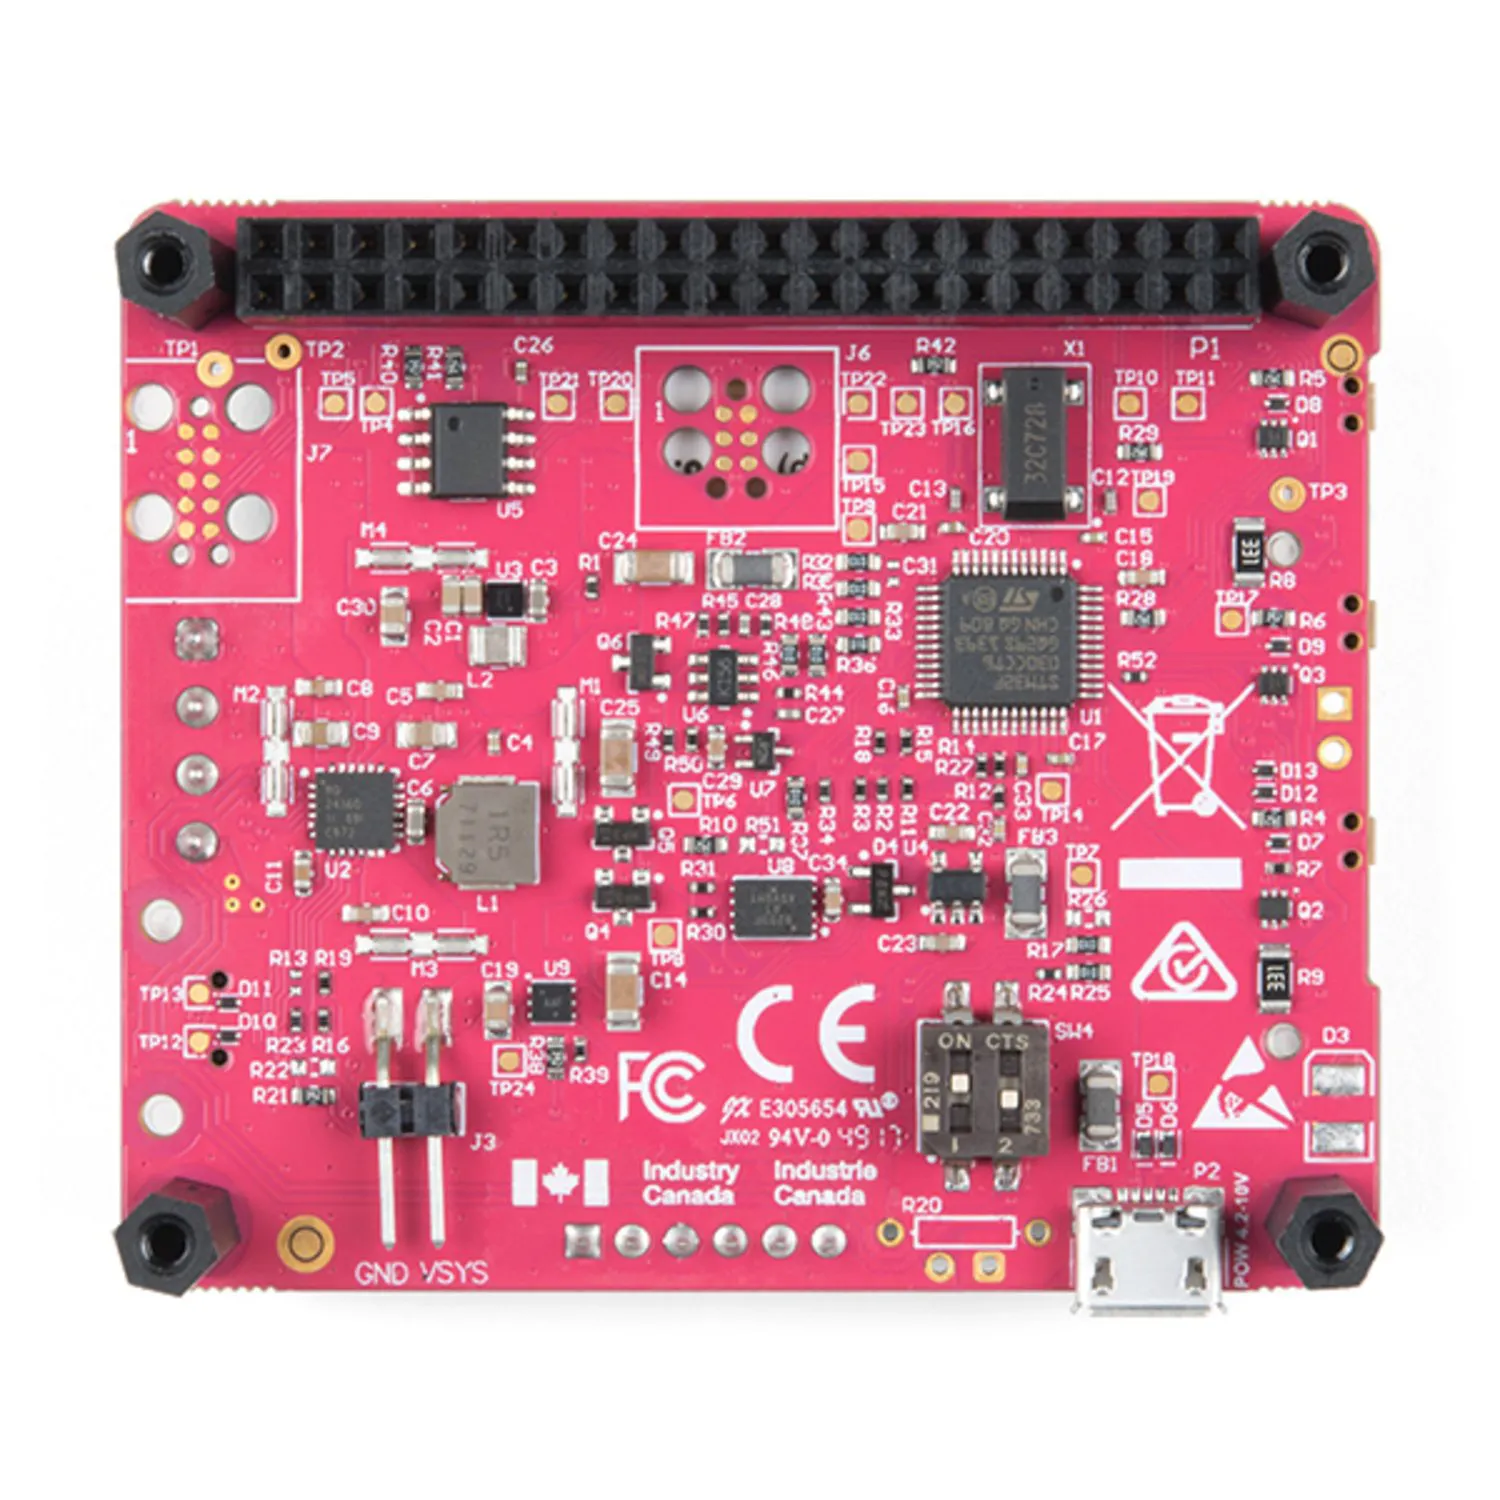 Photo of PiJuice HAT - Raspberry Pi Portable Power Platform